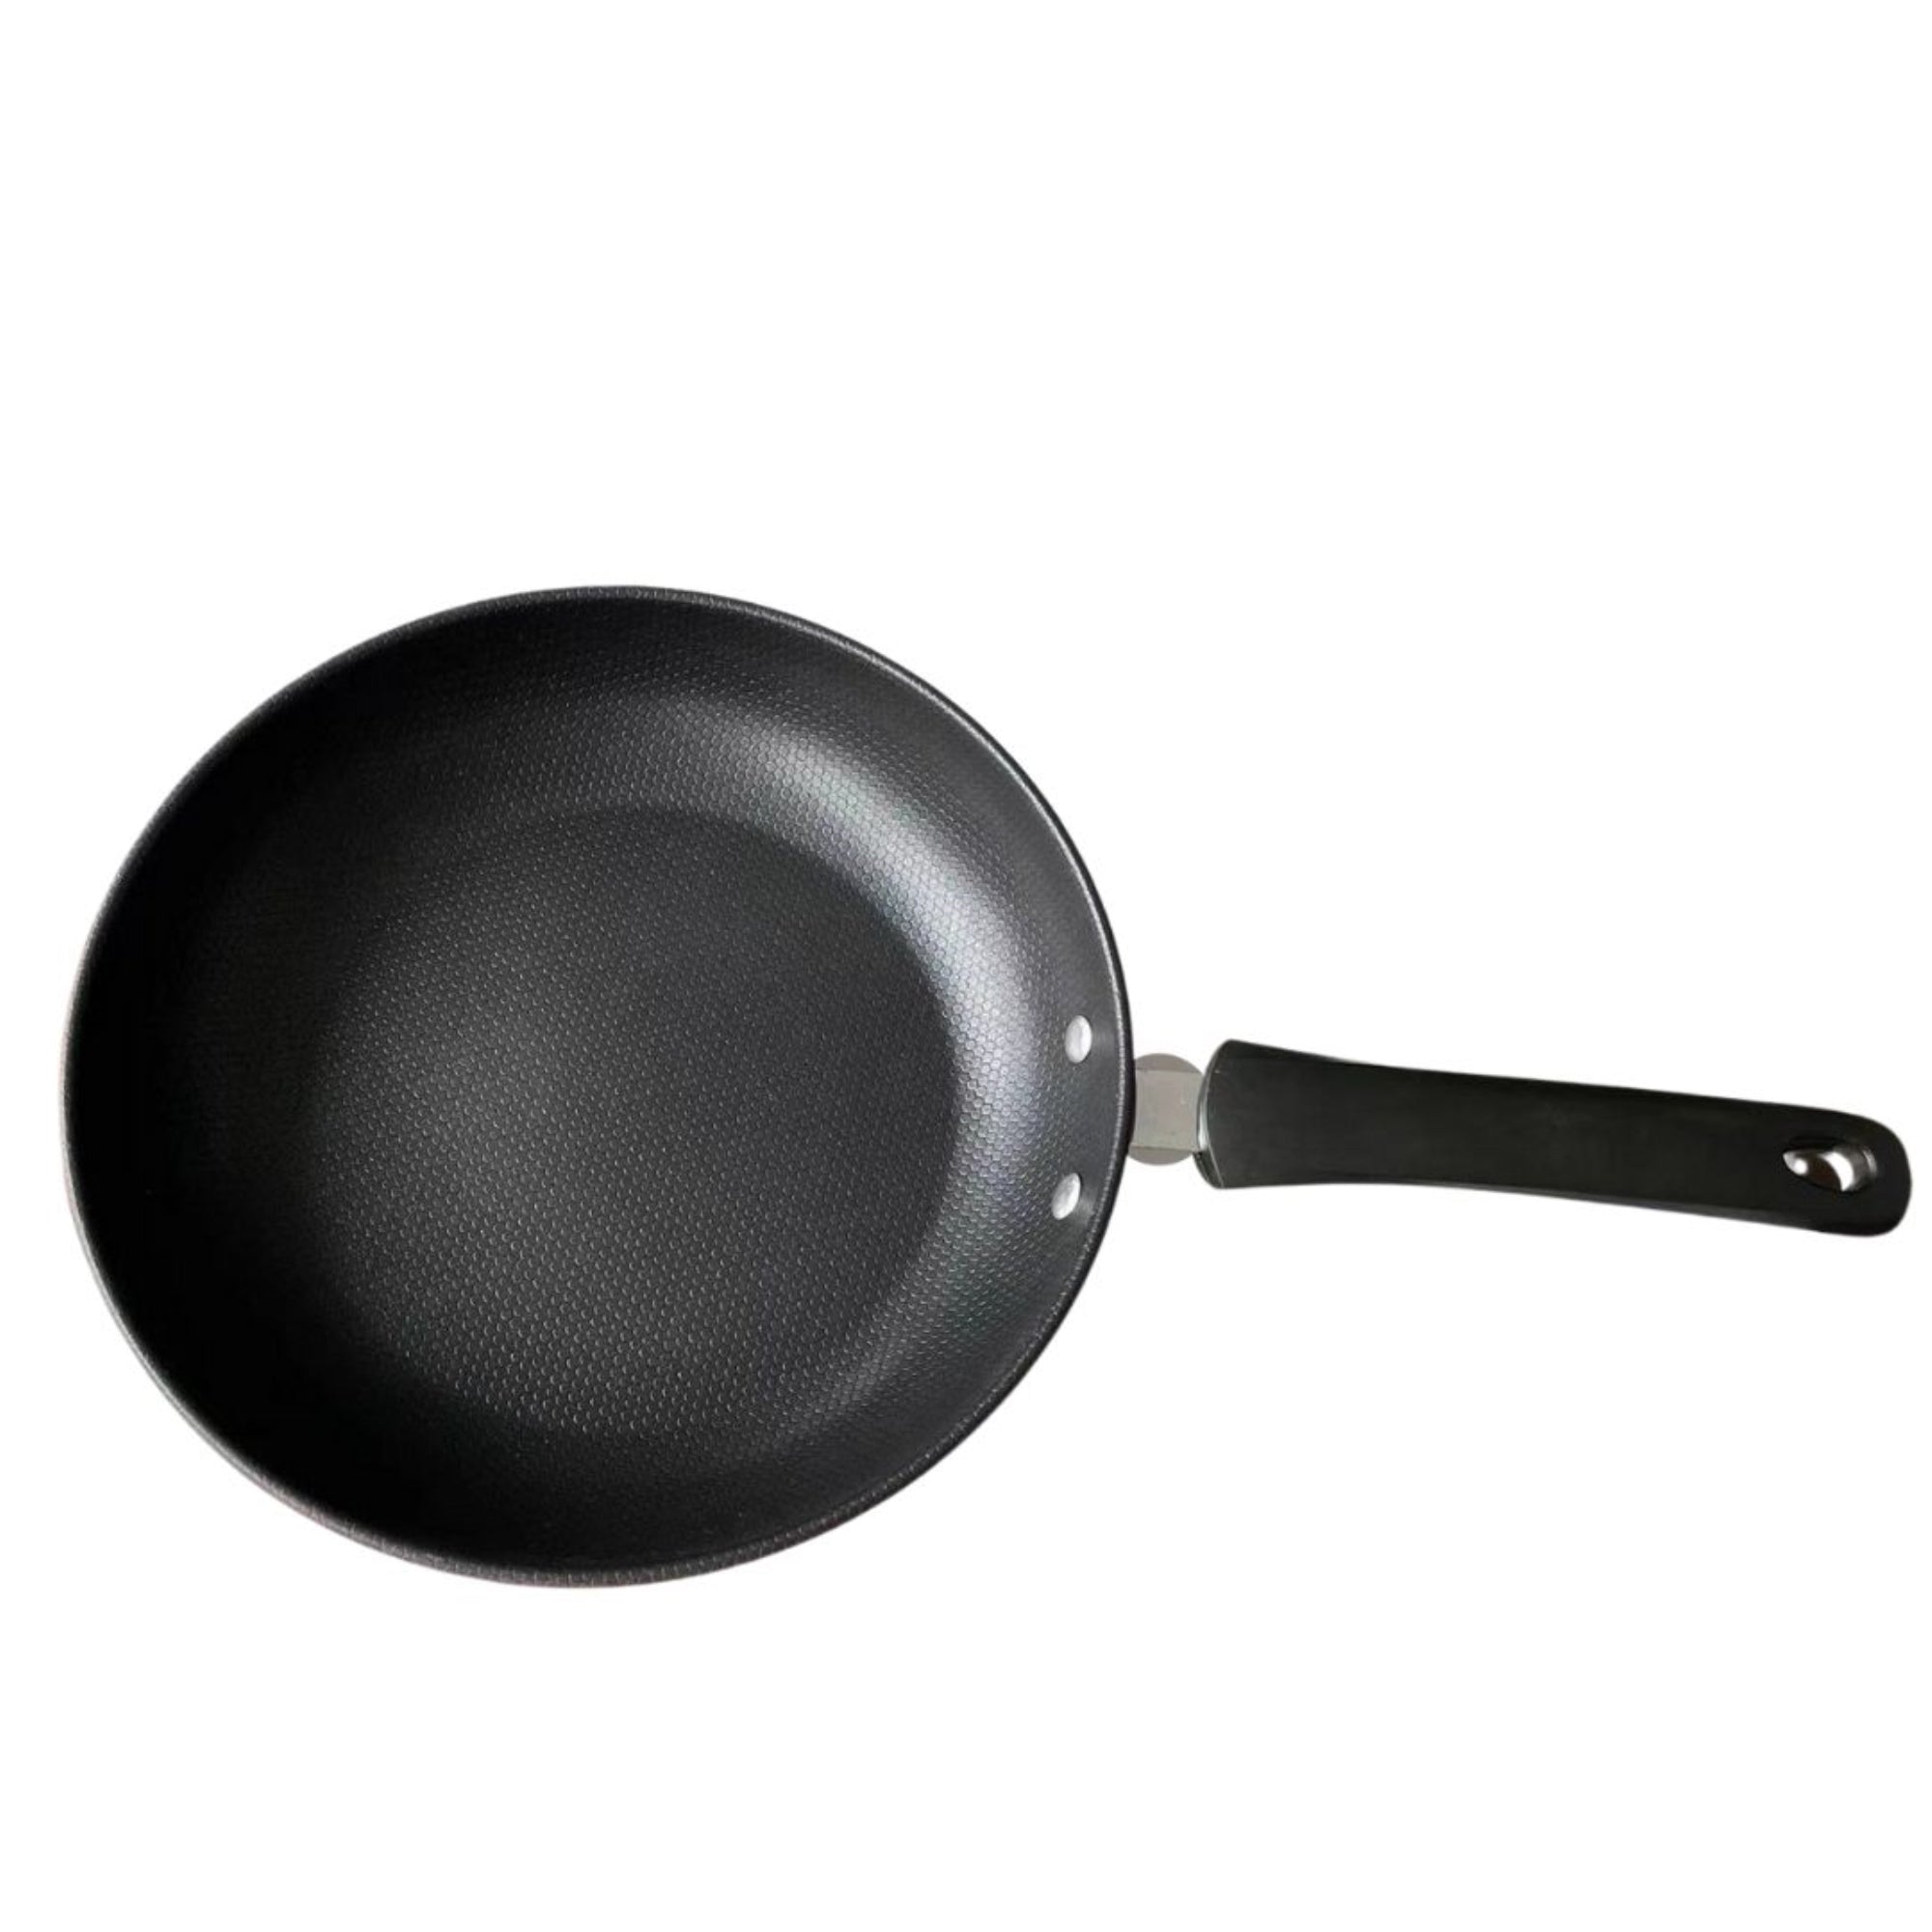 10-Inch Hybrid Nonstick Frying Pan